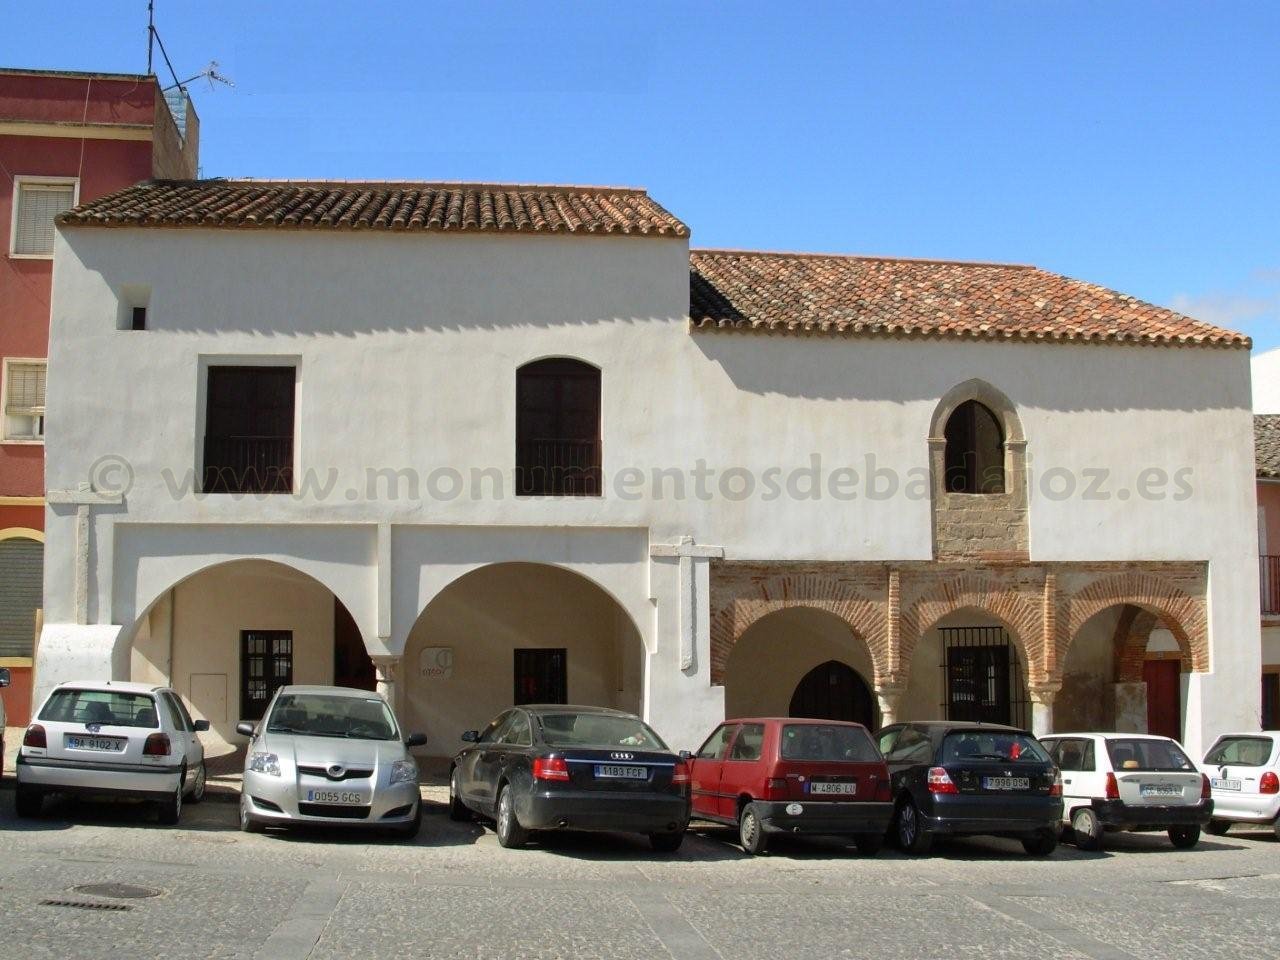 Casas Mudjares, Plaza de San Jos (Badajoz)